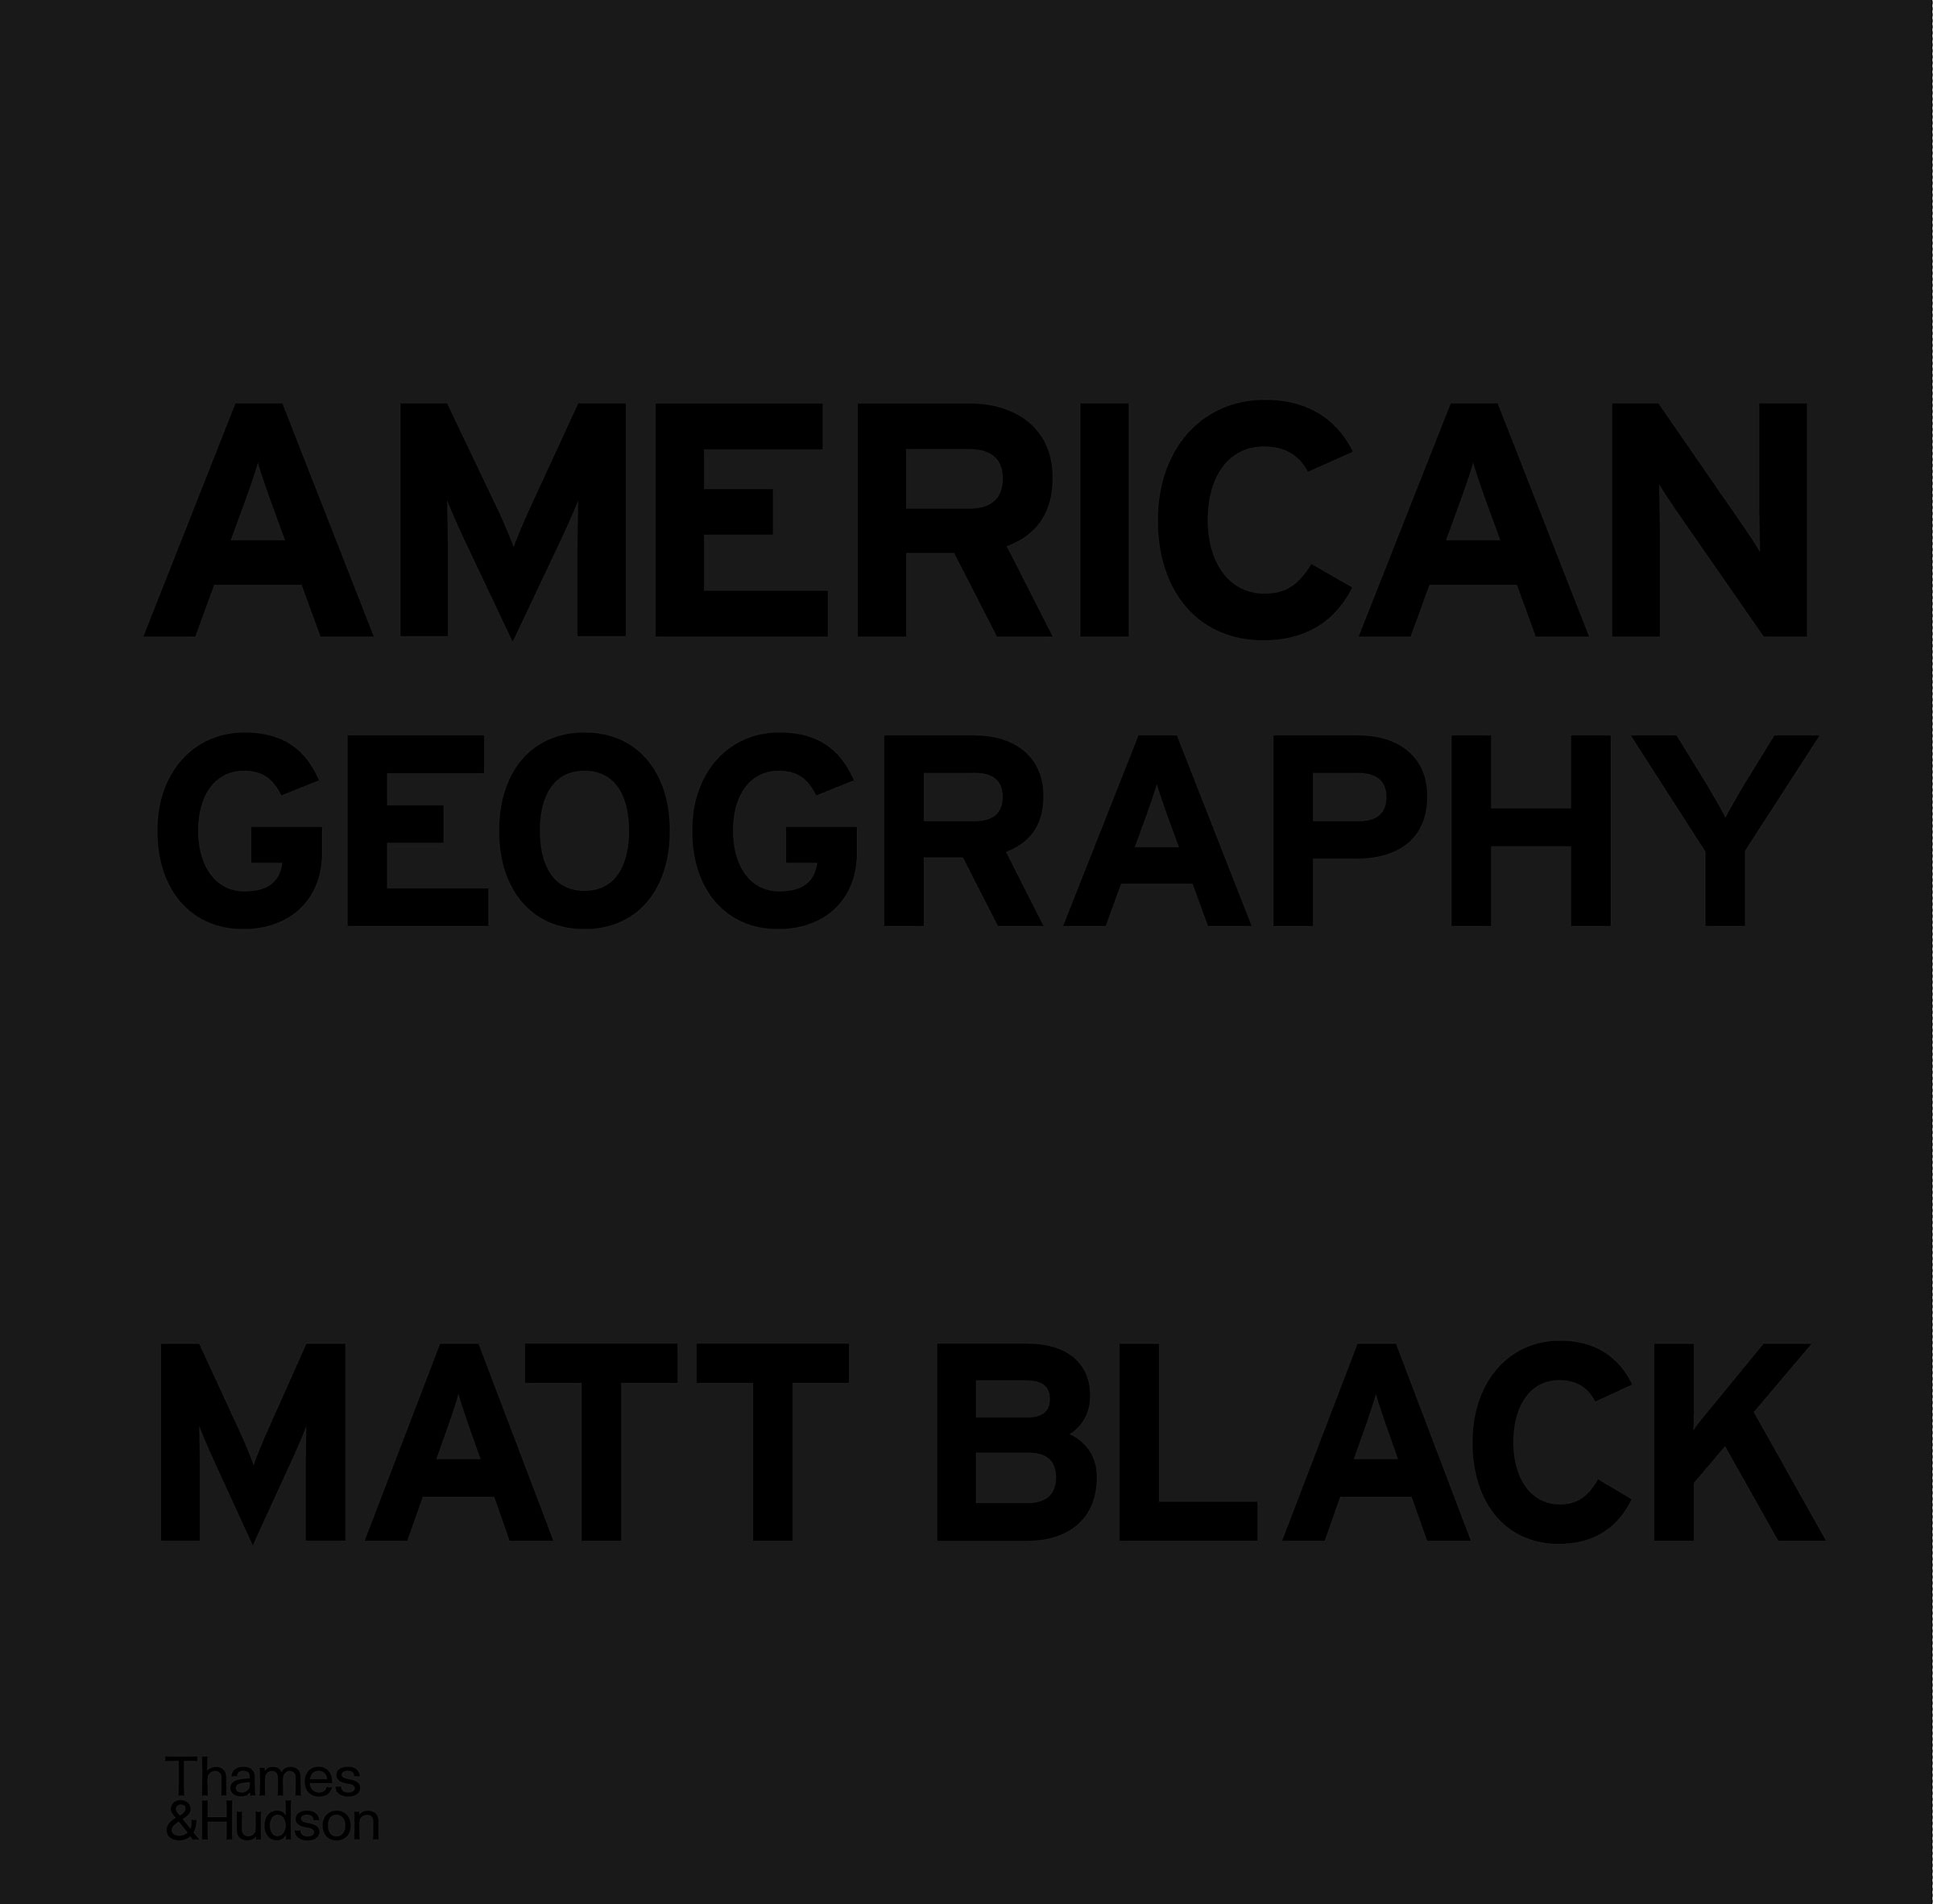 American Geography by Matt Black (Thames & Hudson)